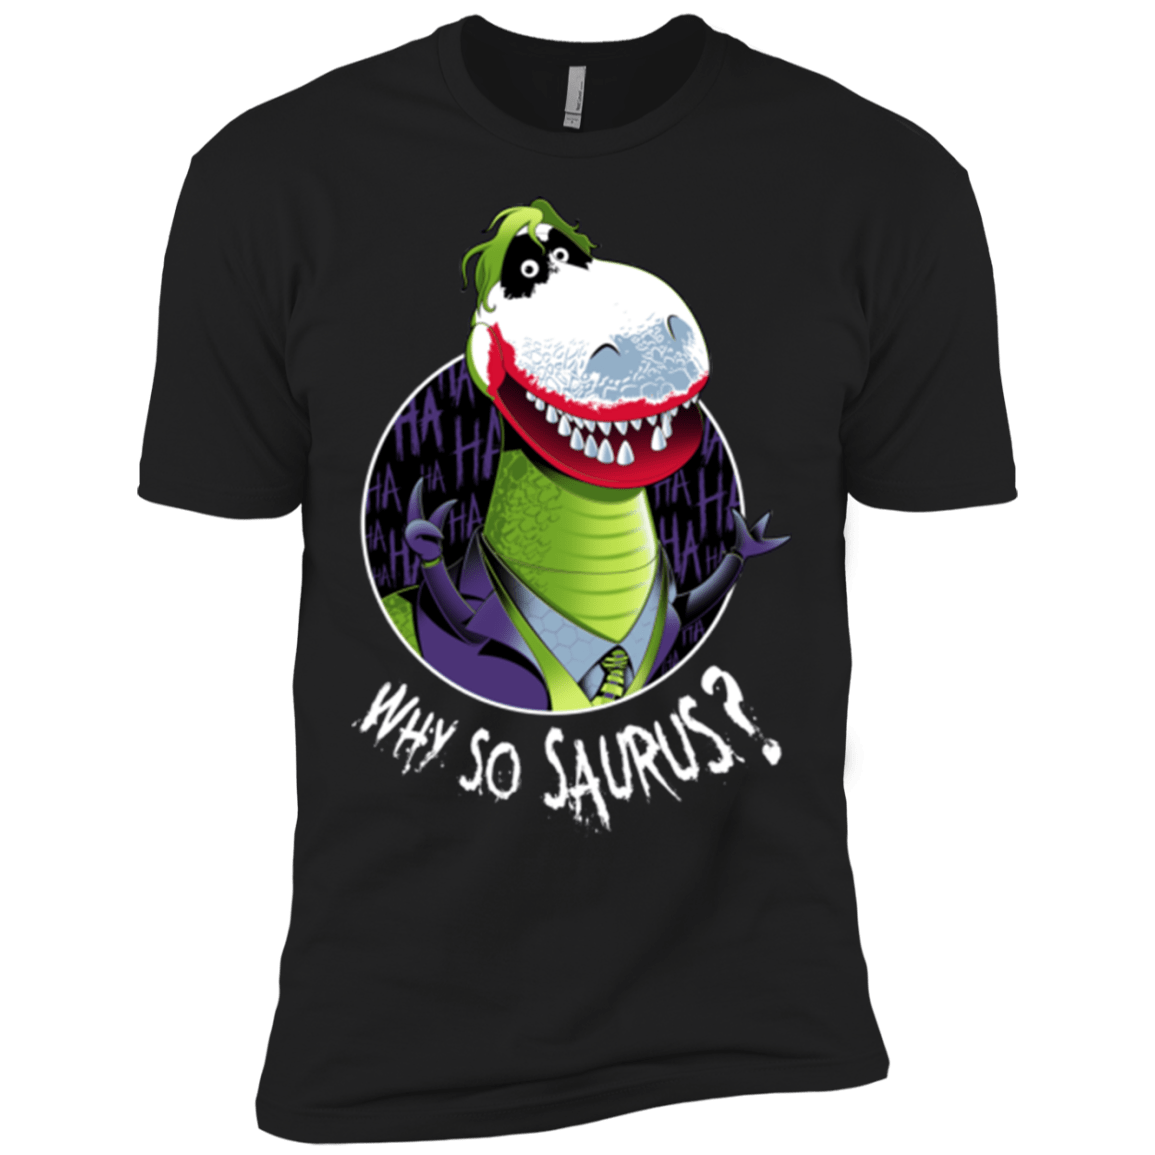 Why So Saurus Men's Premium T-Shirt